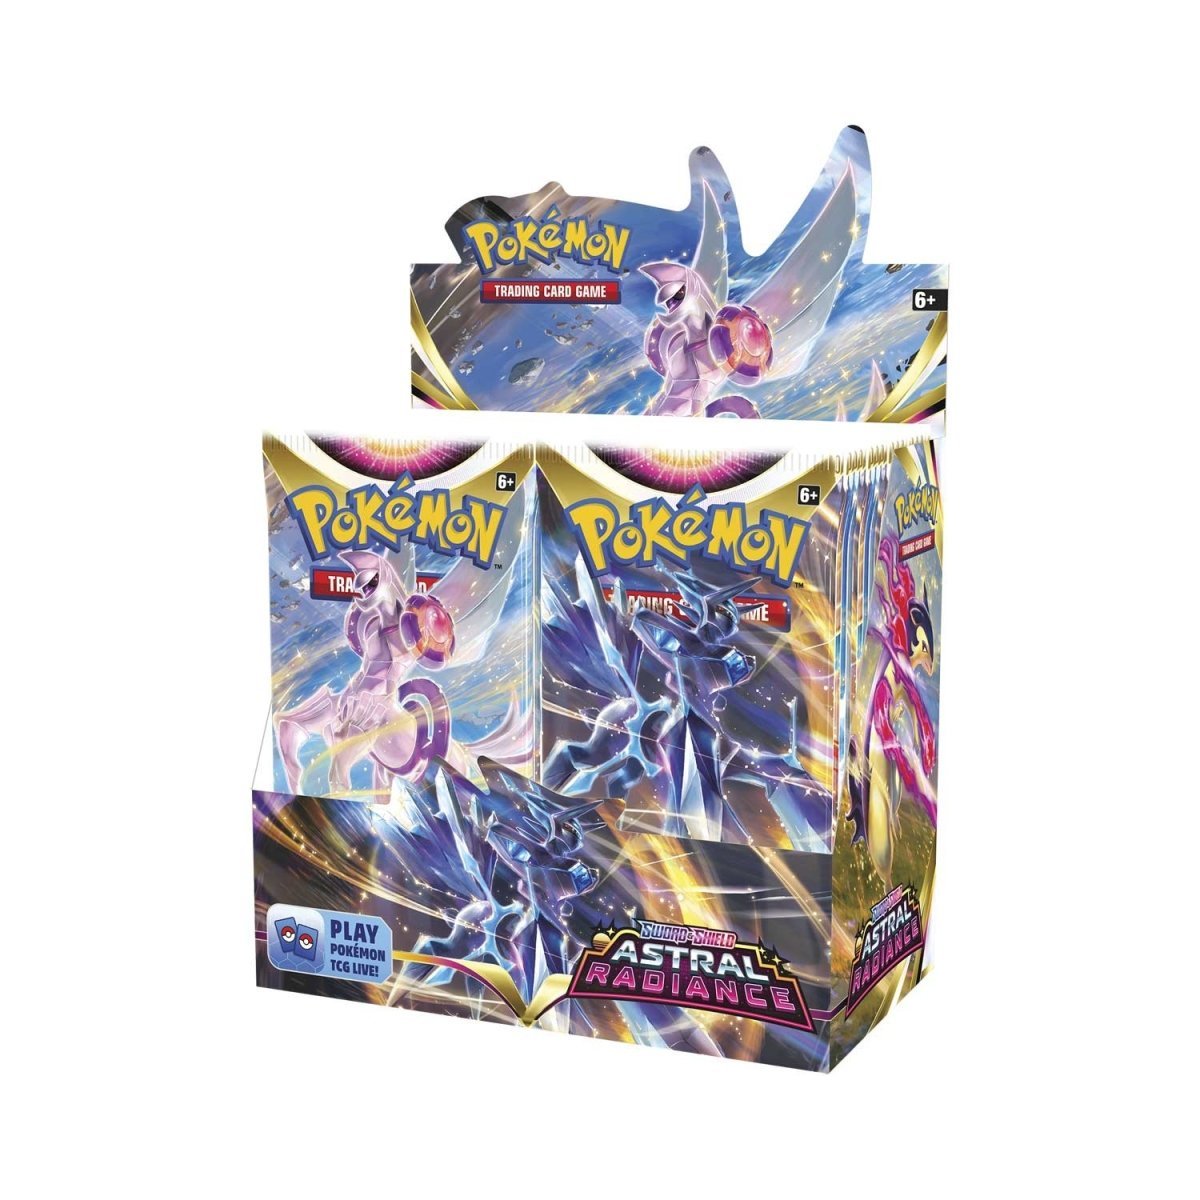 Pokémon TCG: Sword & Shield - Astral Radiance Booster Box - PokeRvmBooster Box